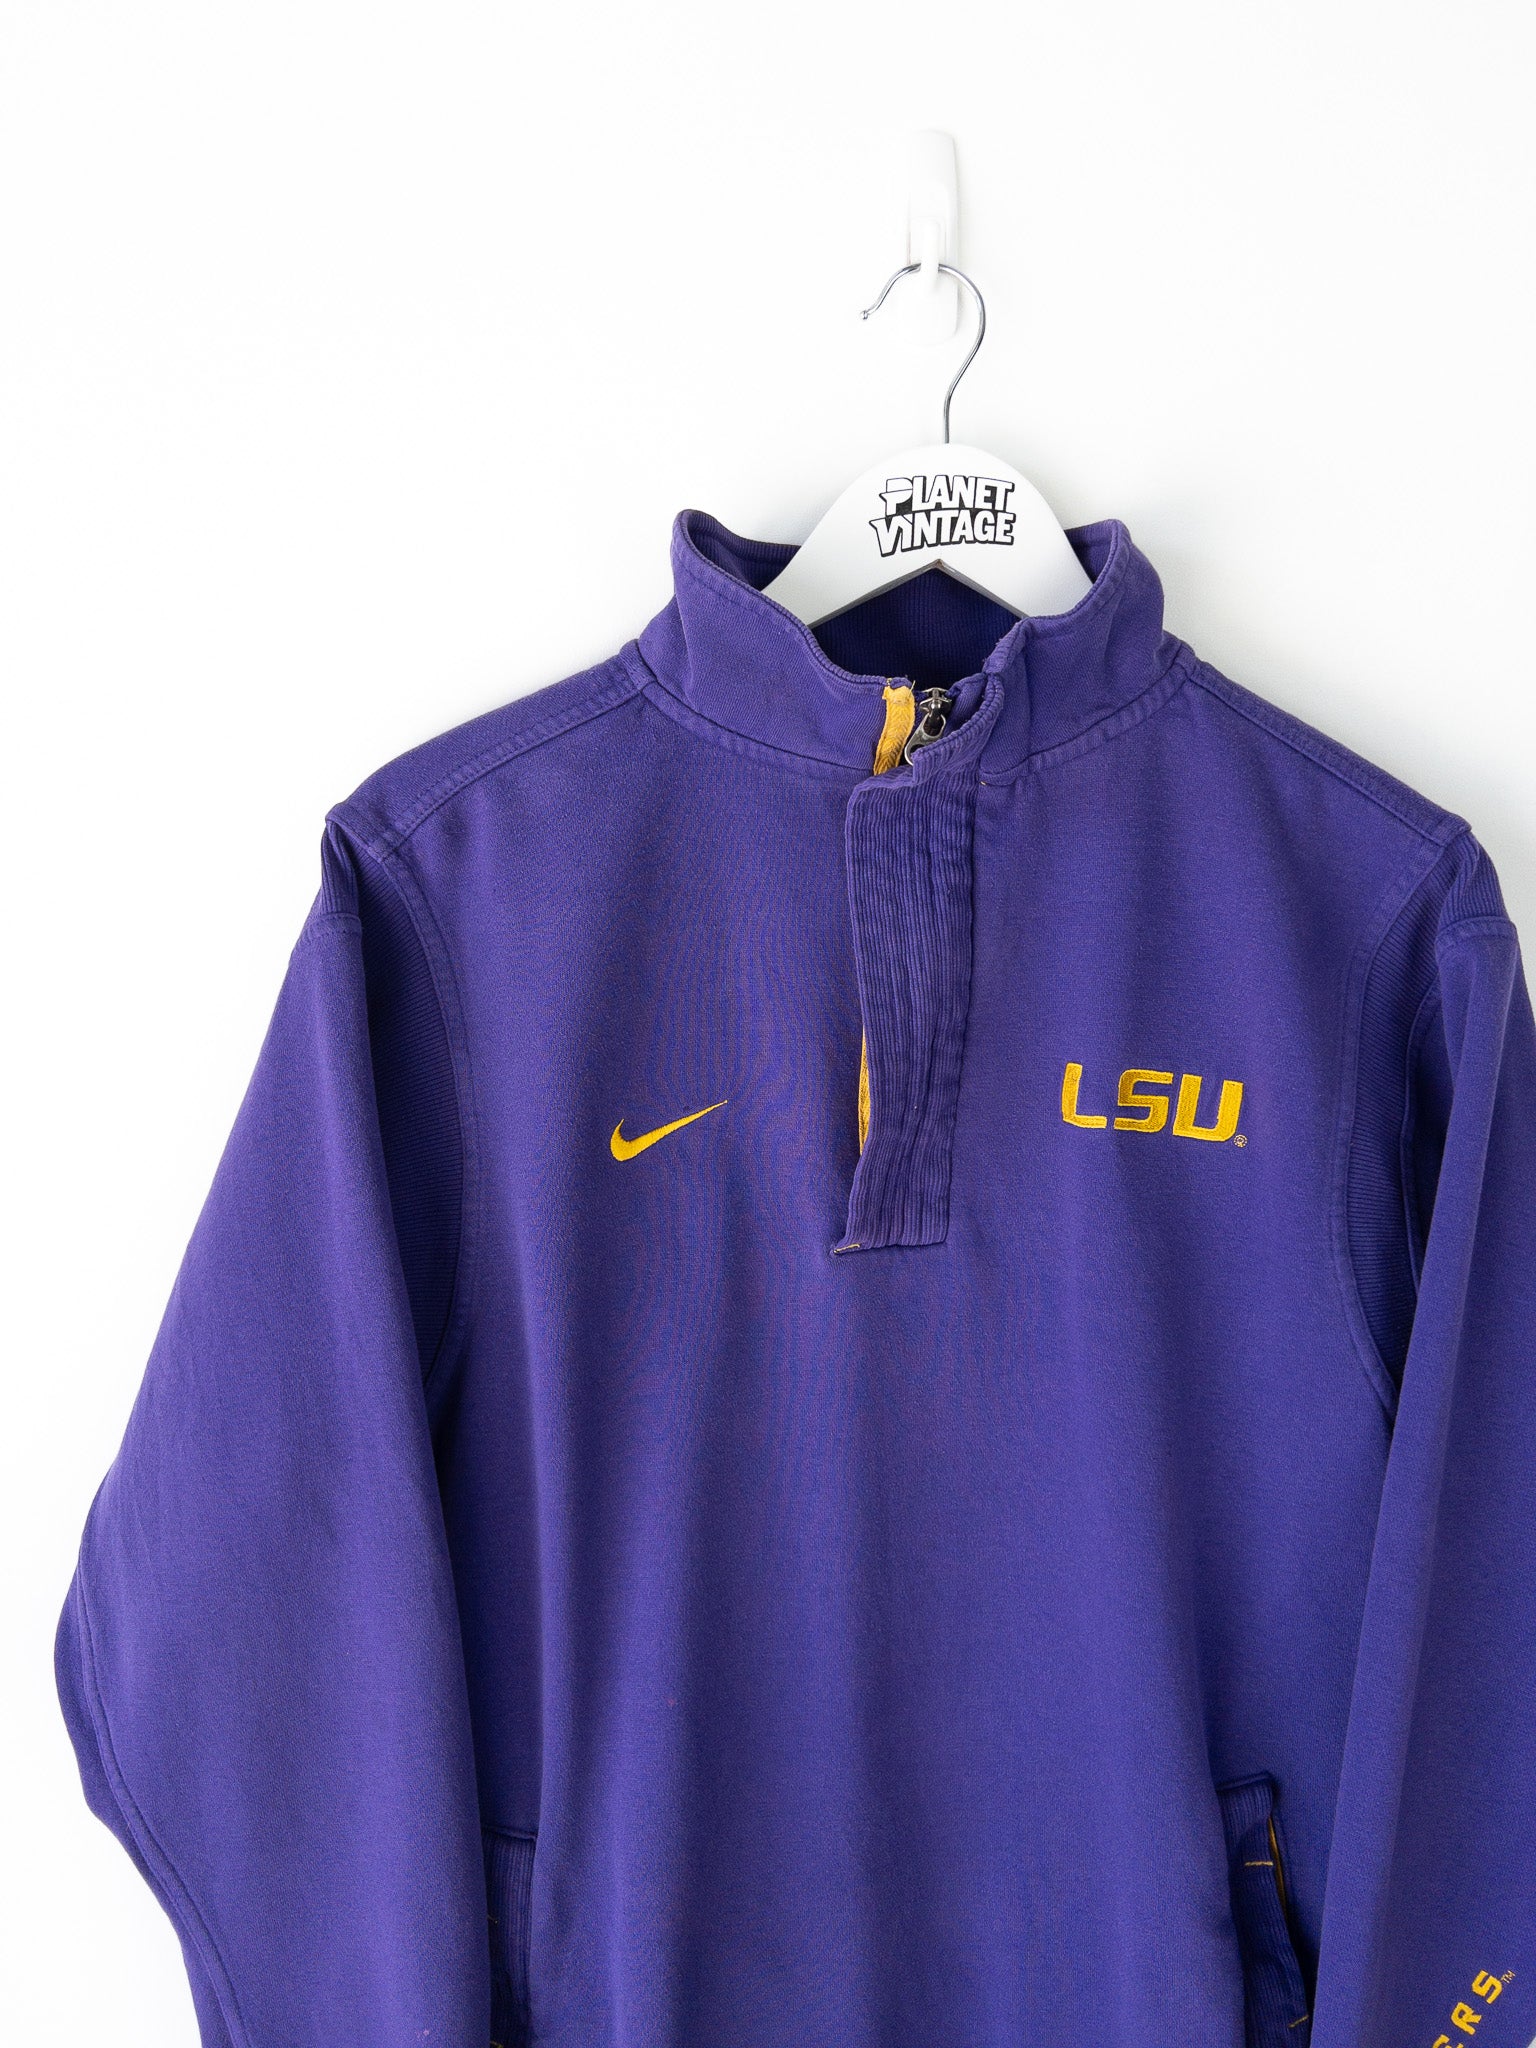 Vintage LSU Tigers Quarter Zip Nike Sweatshirt (M)